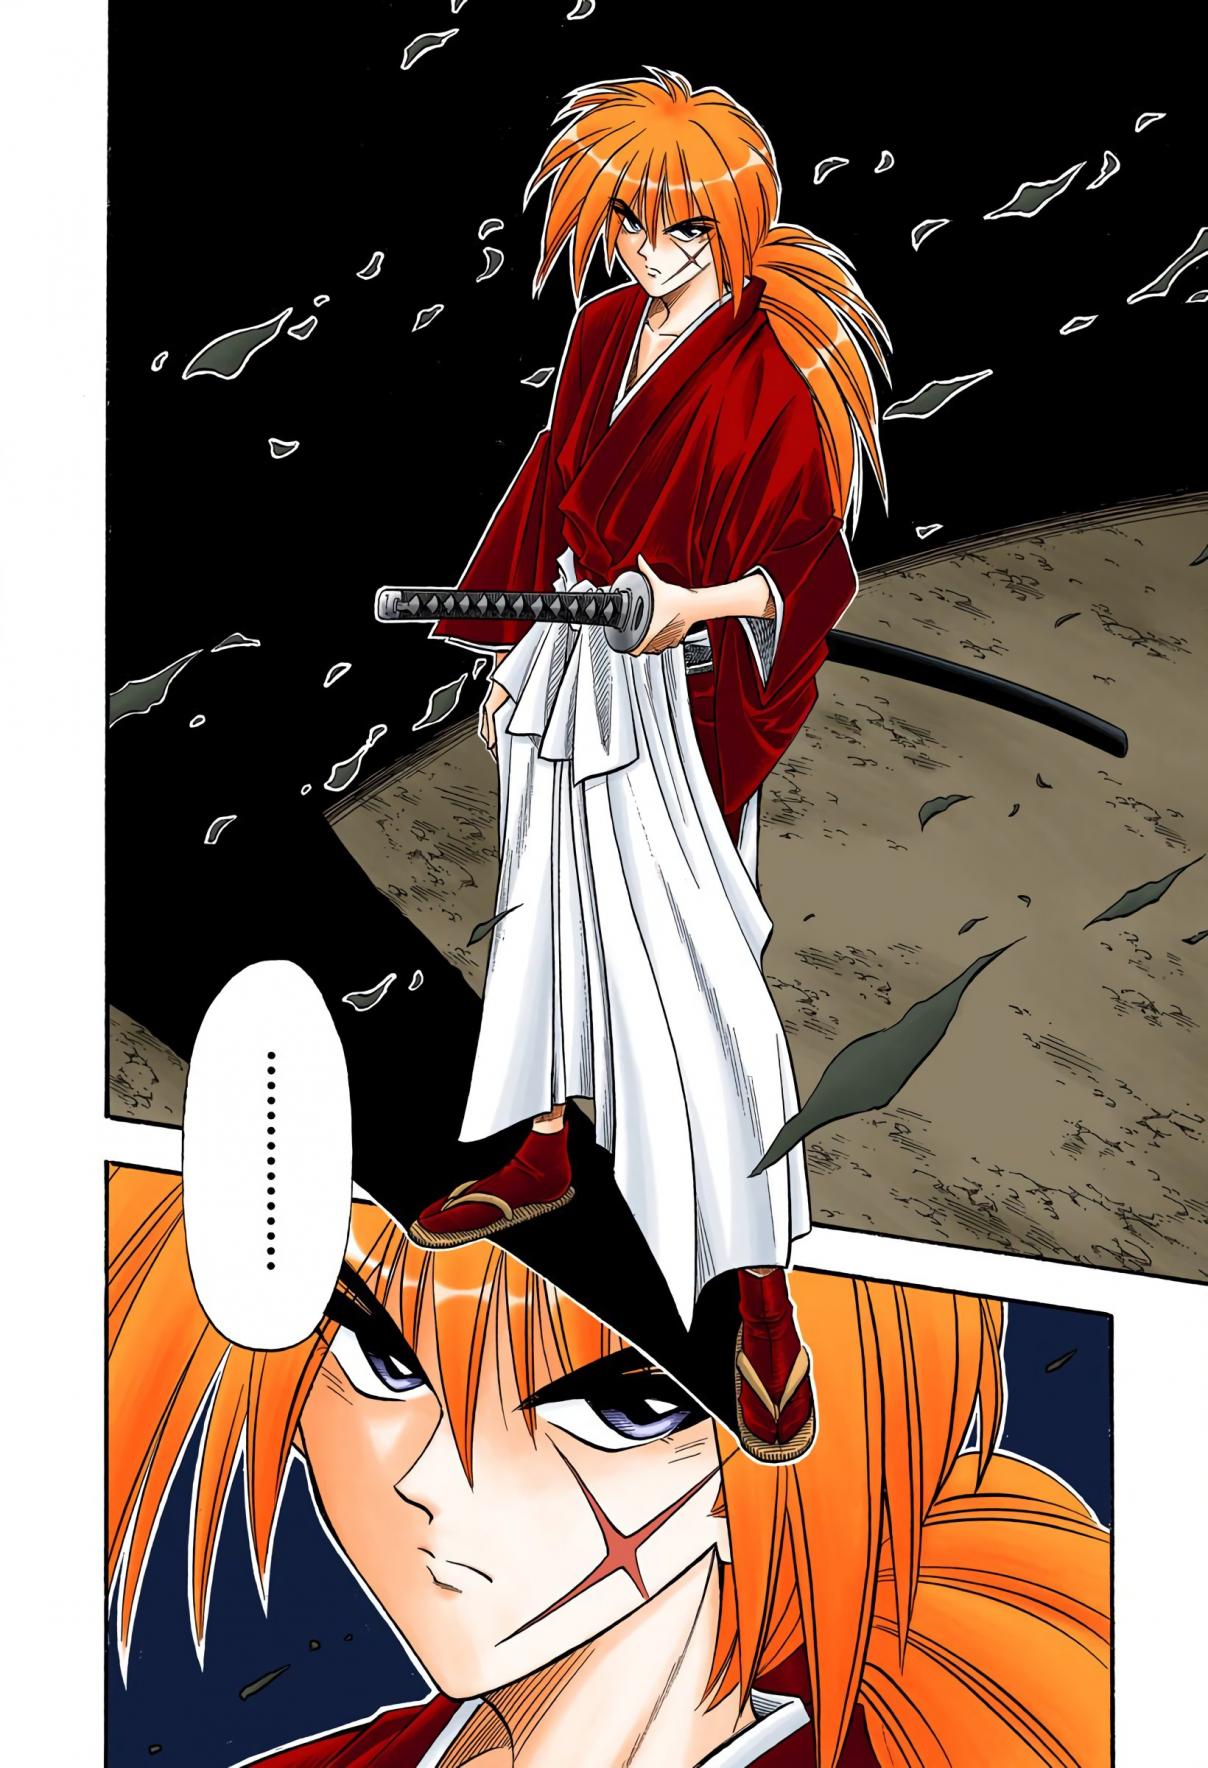 Rurouni Kenshin Digital Colored Comics Vol. 6 Ch. 47 Extra Story Sanosuke and Nishiki e (The End)